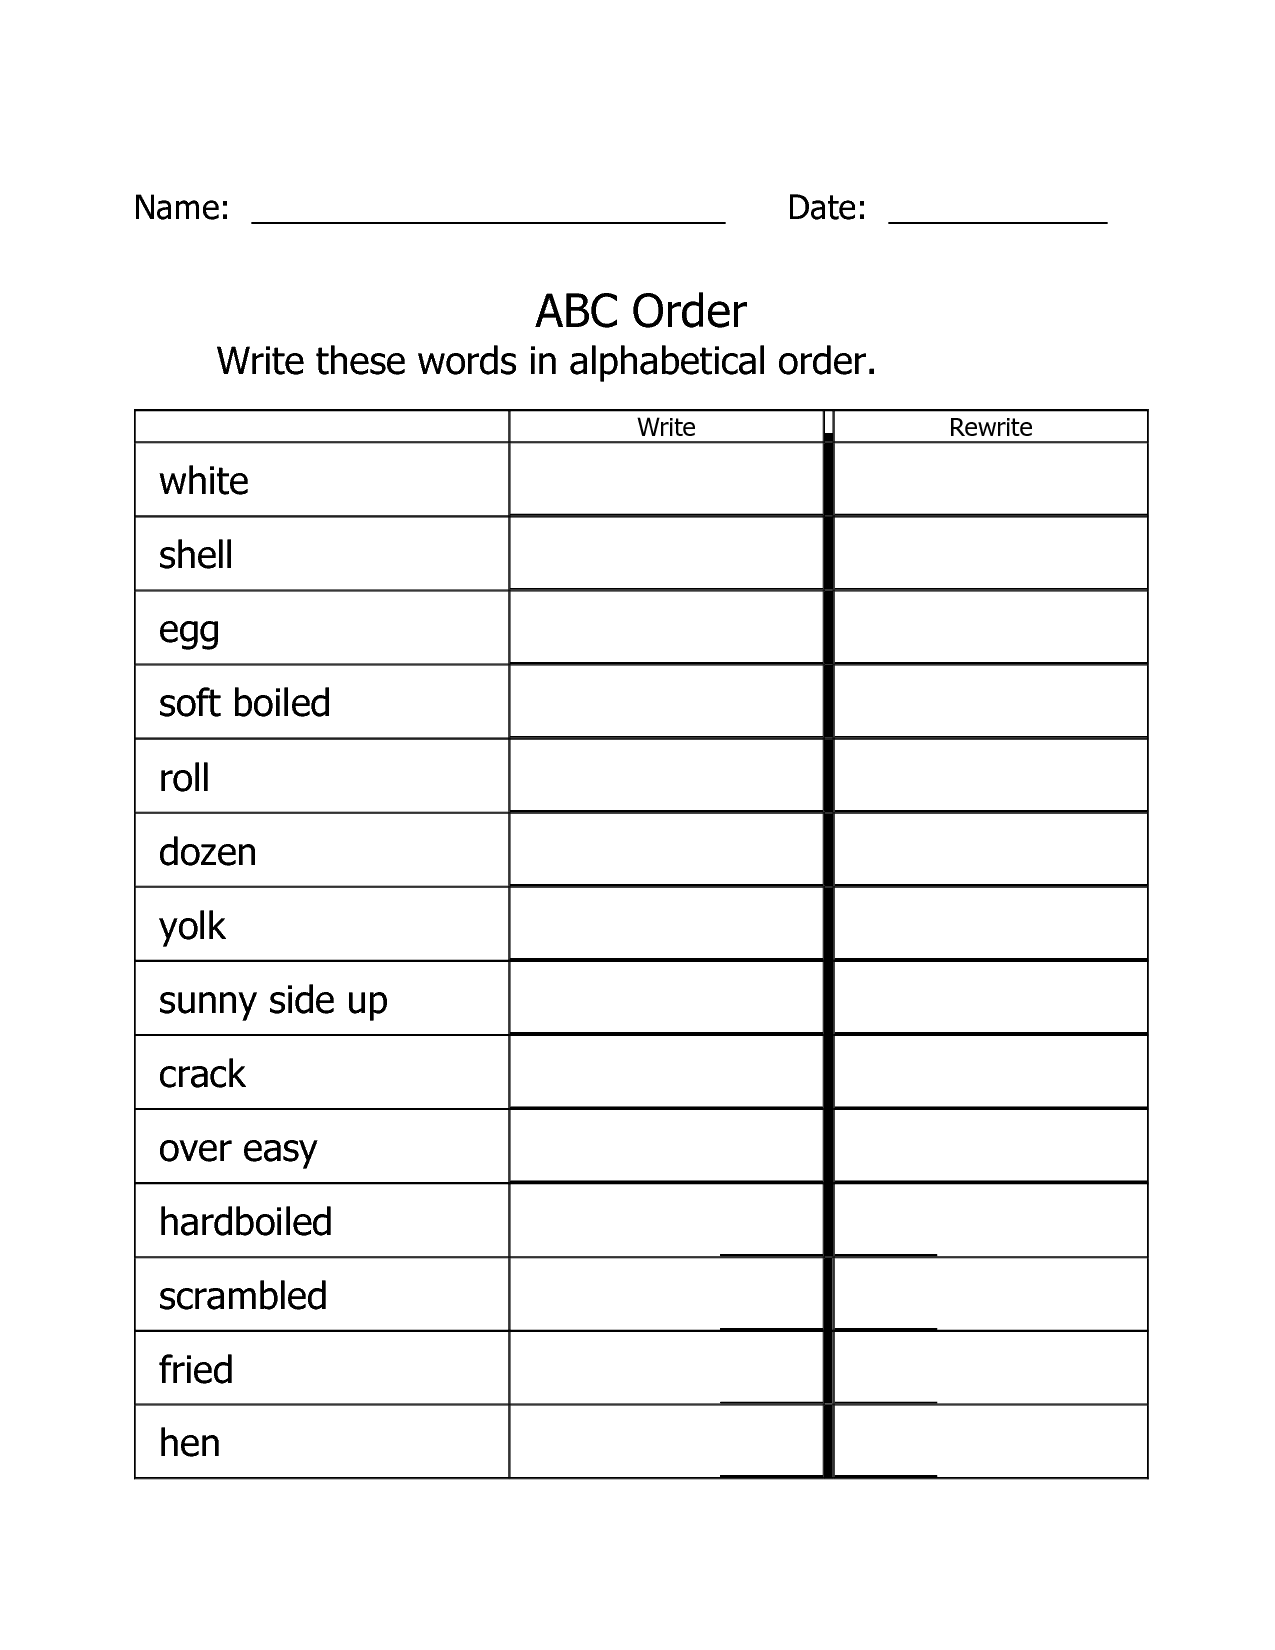 alphabetical-order-free-printable-worksheets-printable-templates